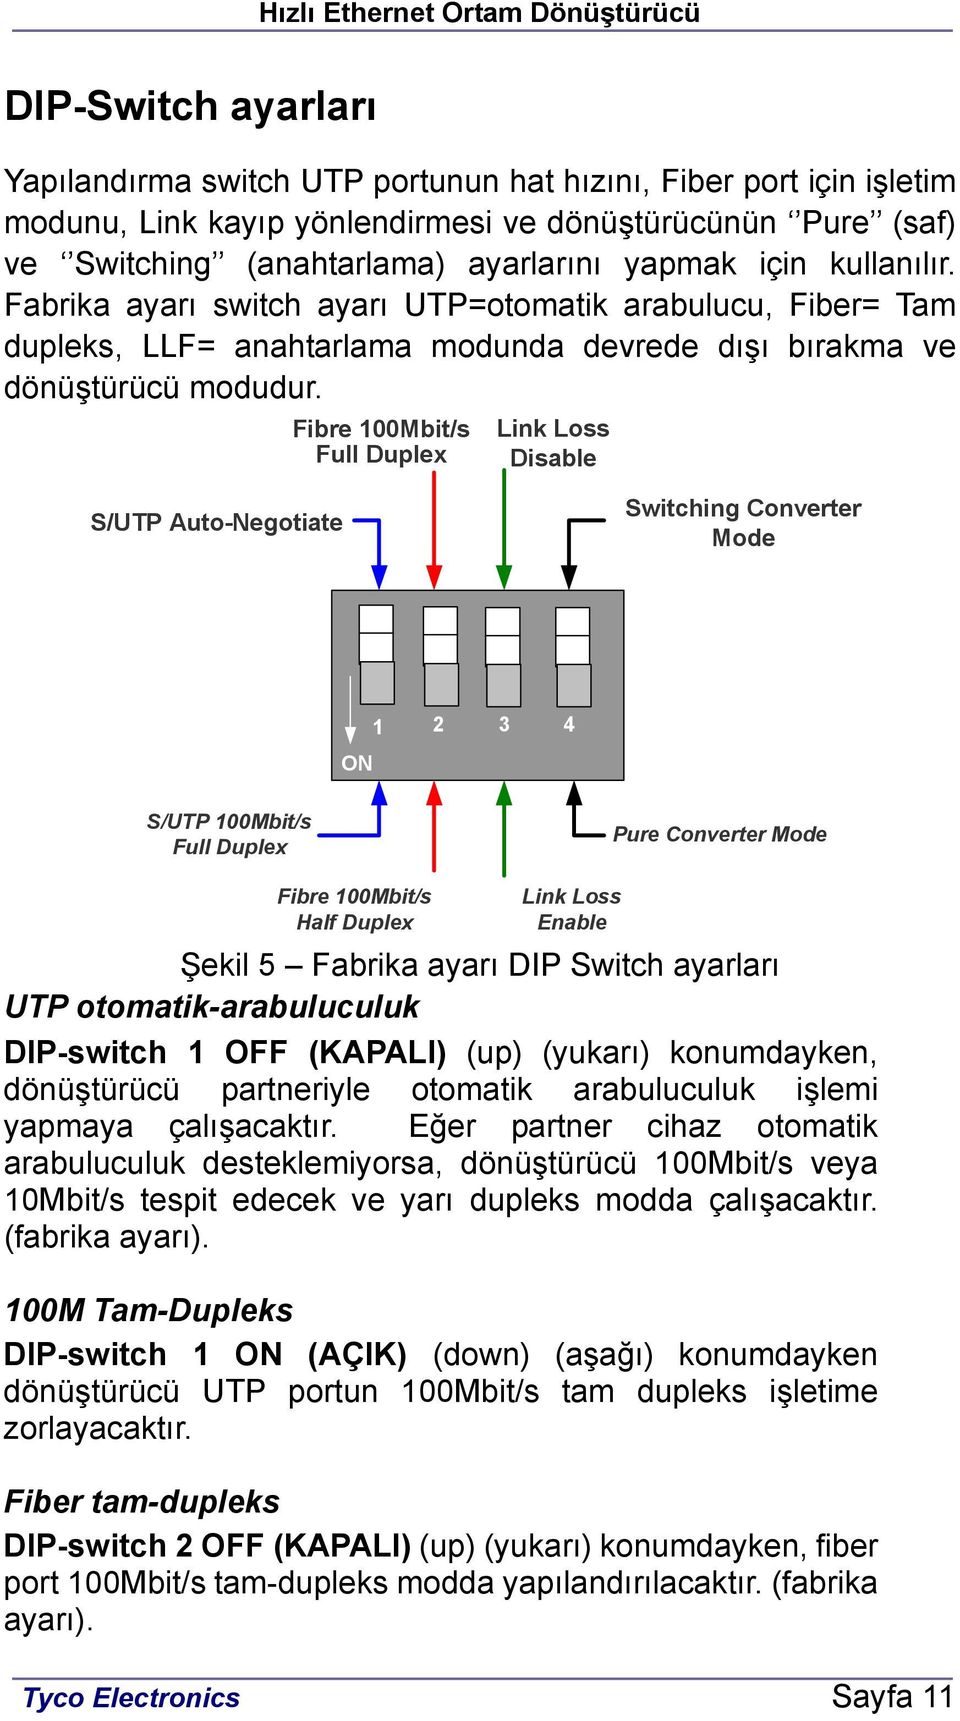 Fibre 100Mbit/s Full Duplex Link Loss Disable S/UTP Auto-Negotiate Switching Converter Mode 1 ON 2 3 4 S/UTP 100Mbit/s Full Duplex Pure Converter Mode Fibre 100Mbit/s Half Duplex Link Loss Enable